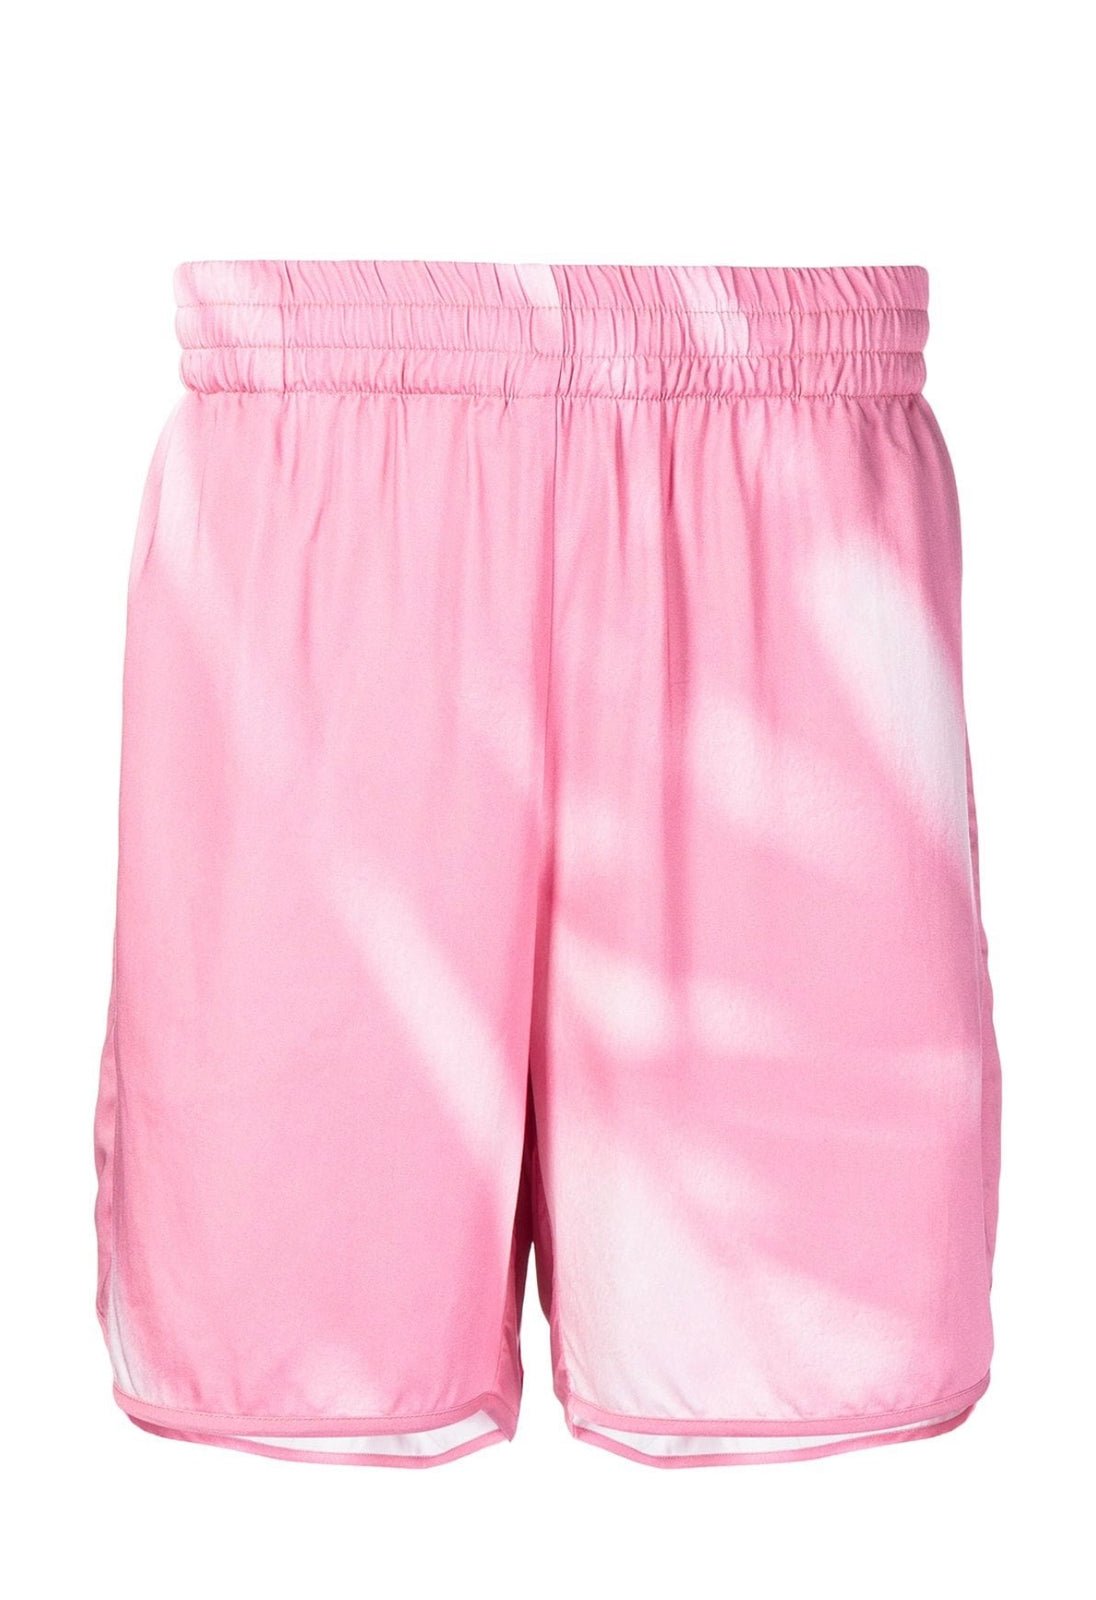 Blue Sky Inn Shorts Shadow Pink - AL Capone PremiumClothingShorts963-13